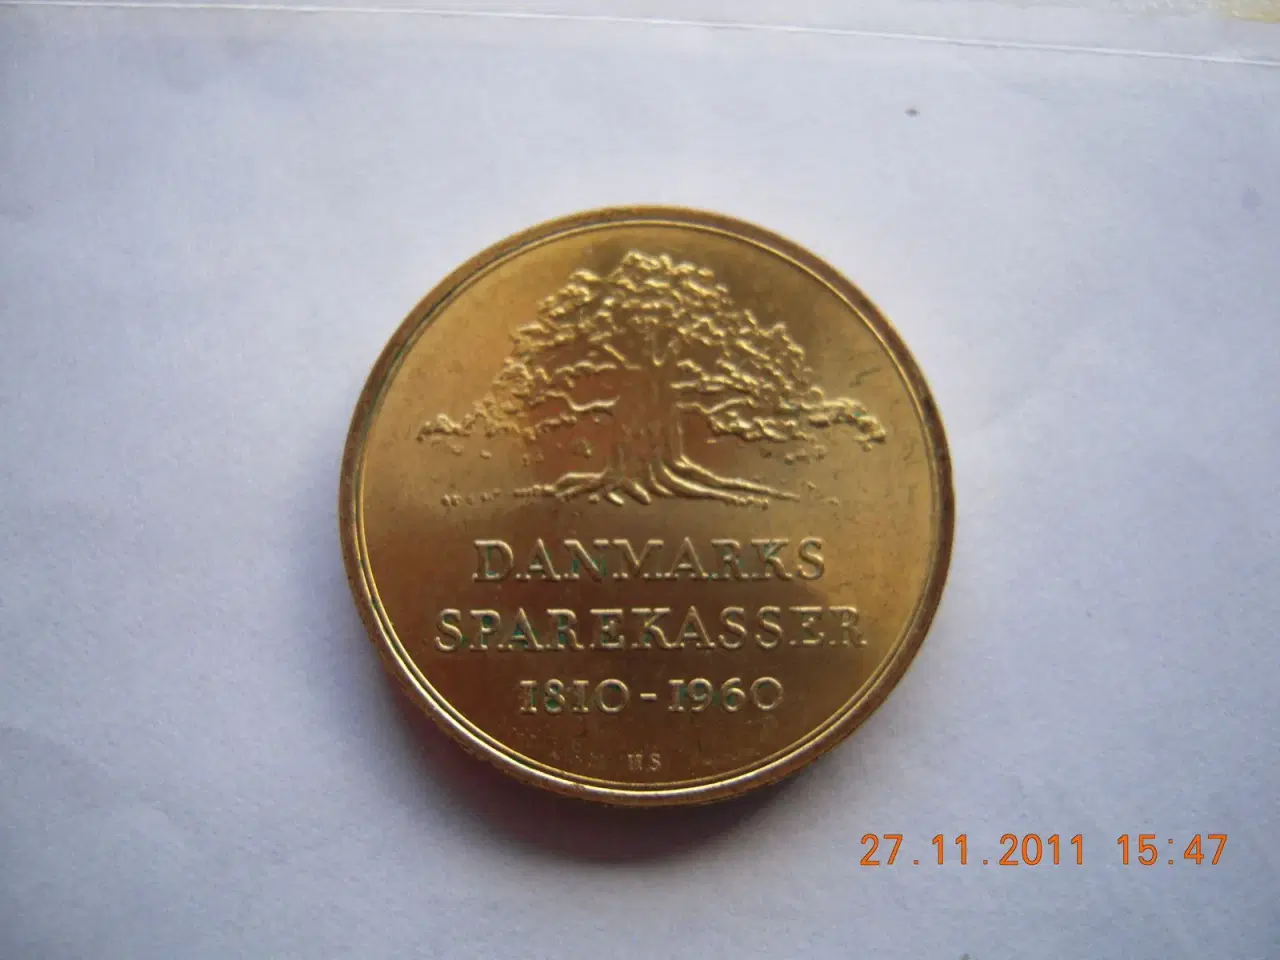 Billede 2 - Sparekassemedalje 150 år 1810-1960